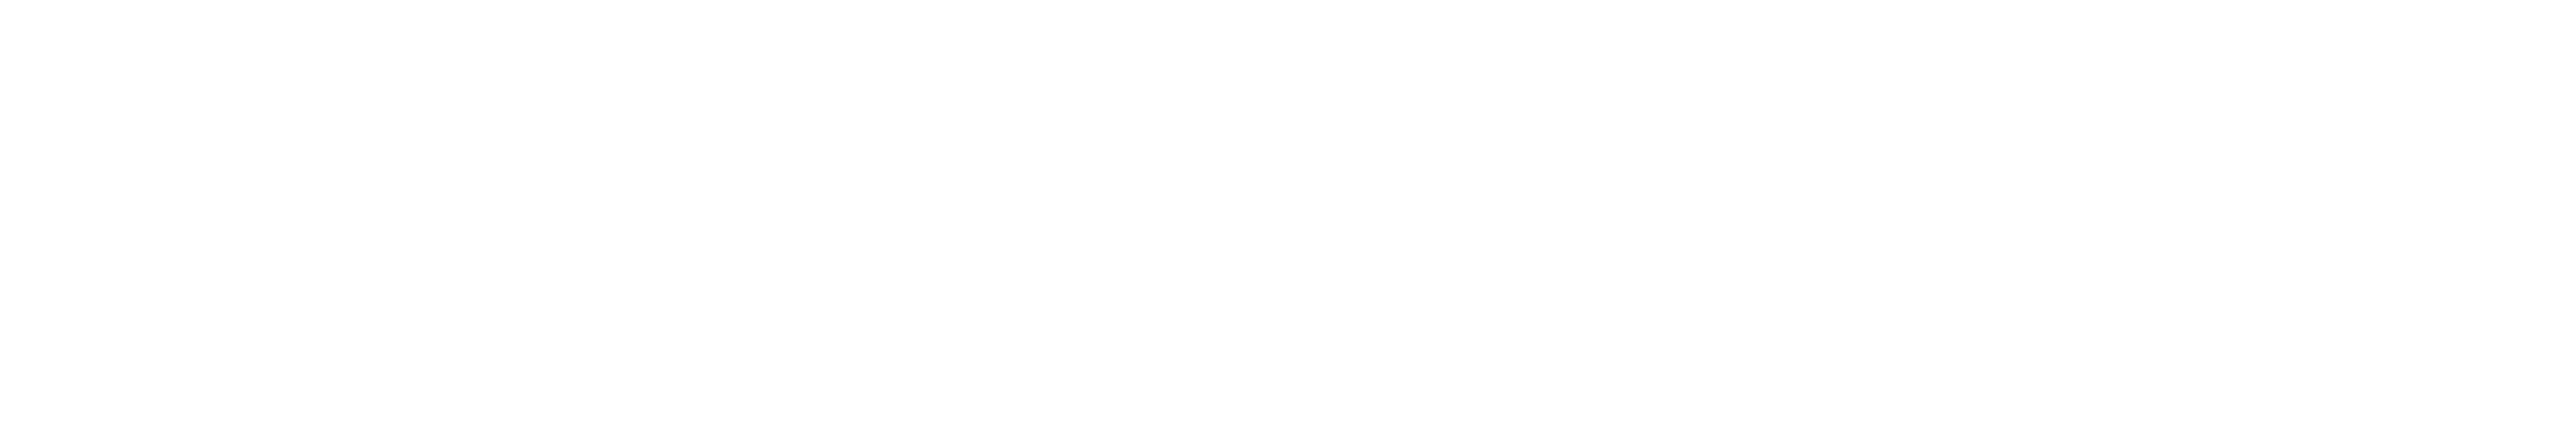 Logotipo FINDOIT-blanco-scaled